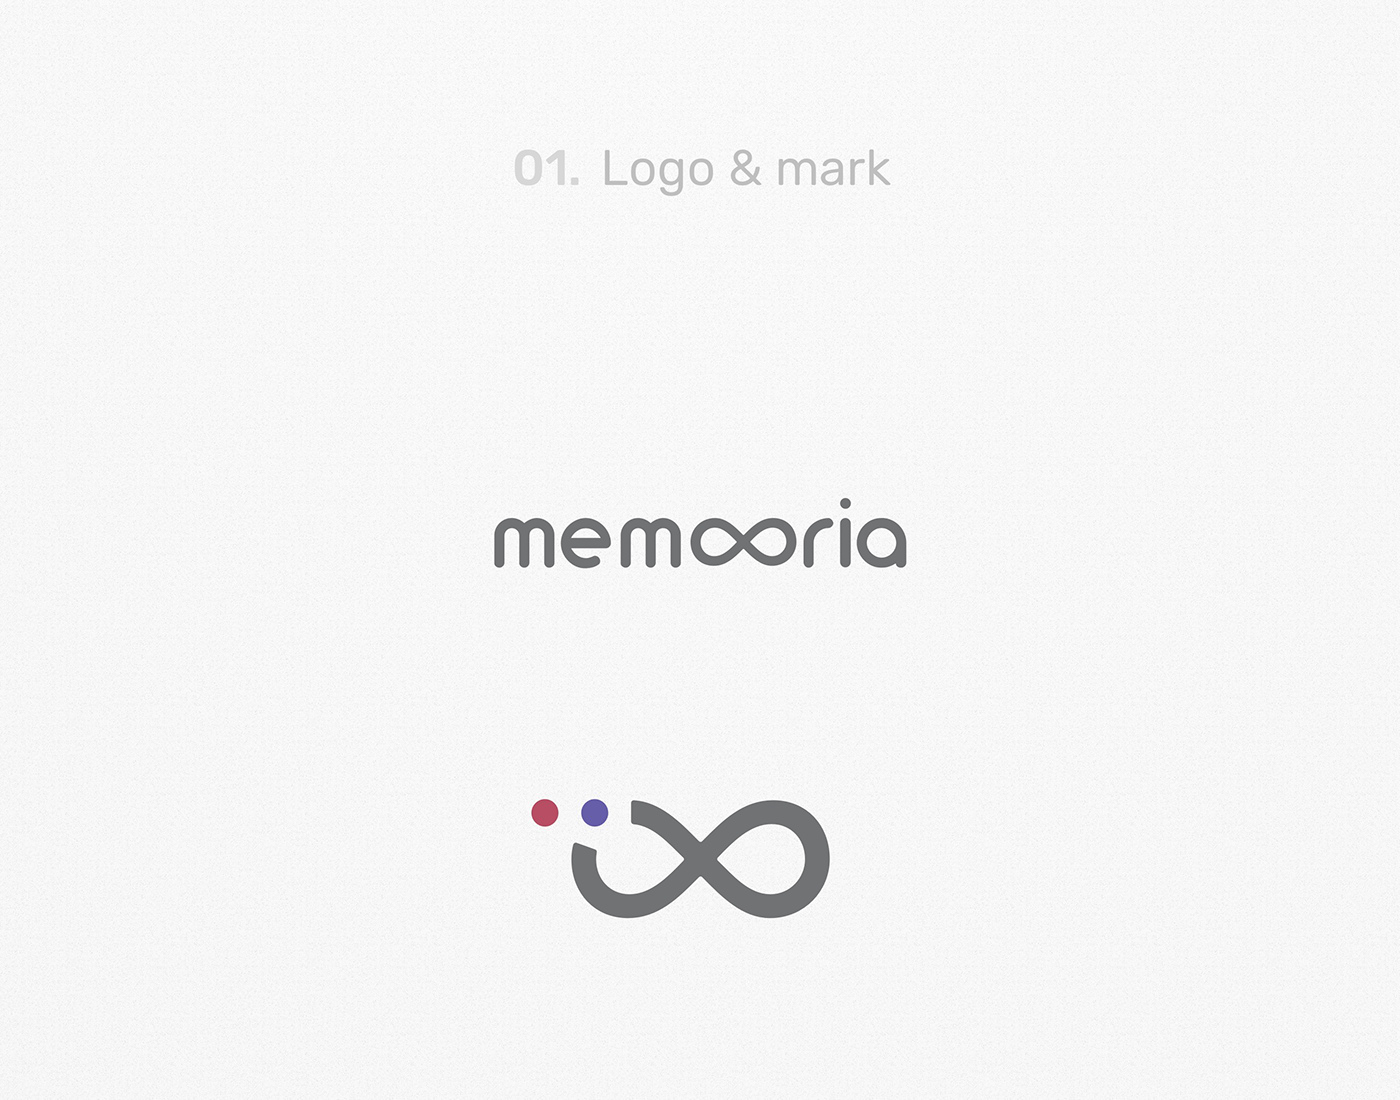 Logotype and logo mark of Memooria